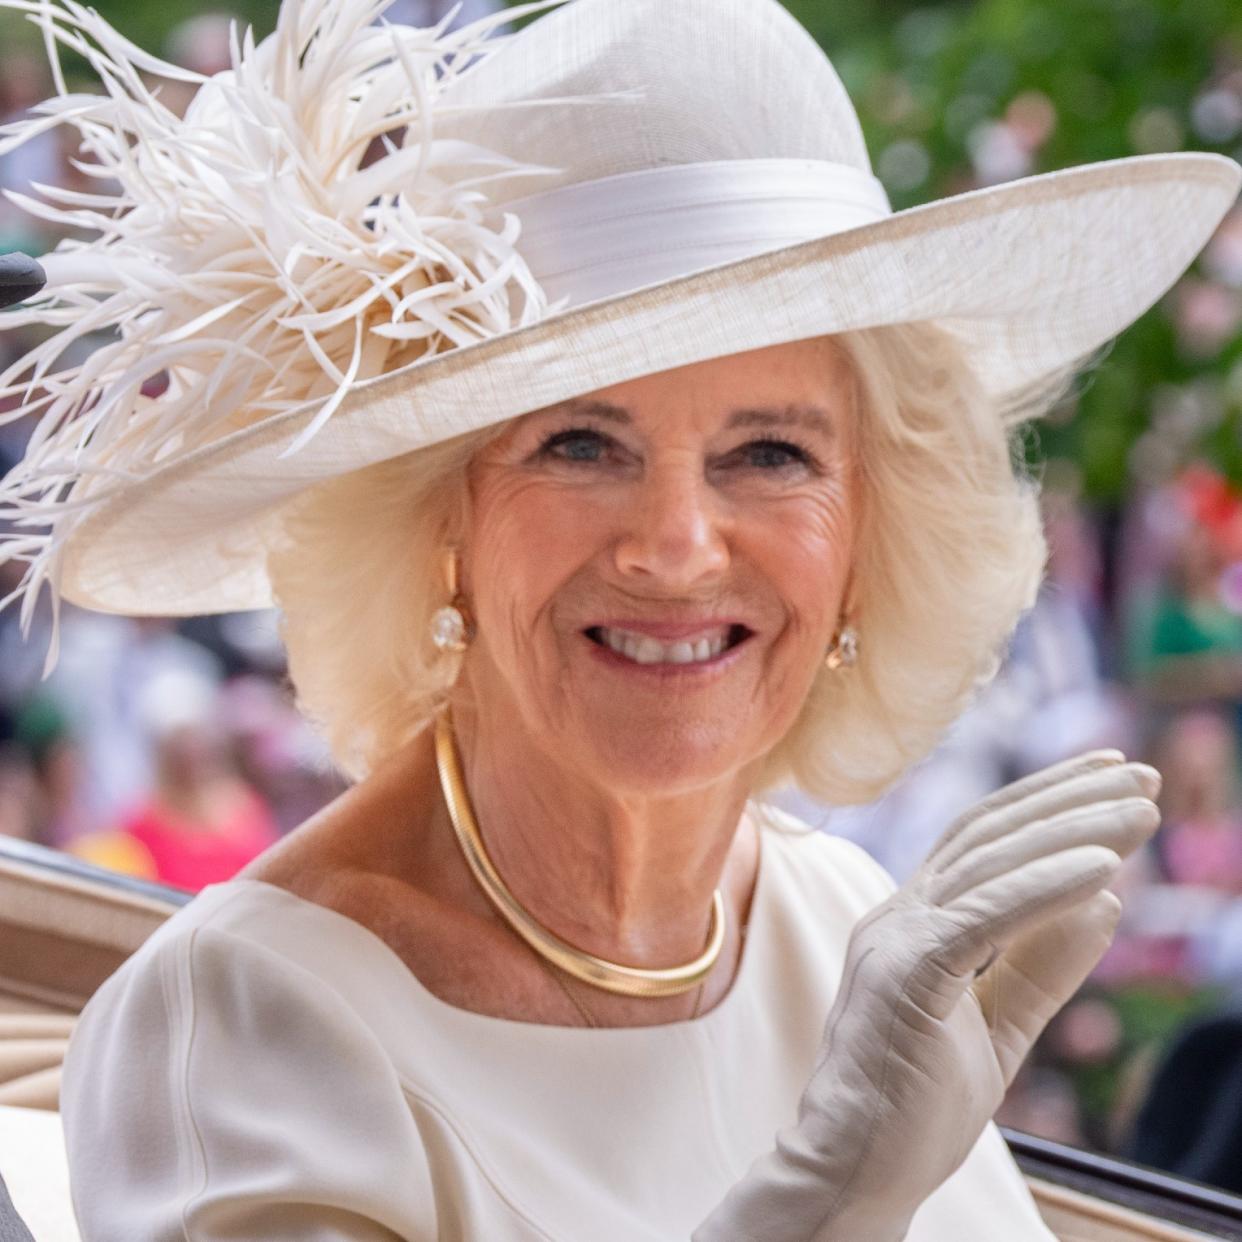  Queen Camilla at Royal Ascot 